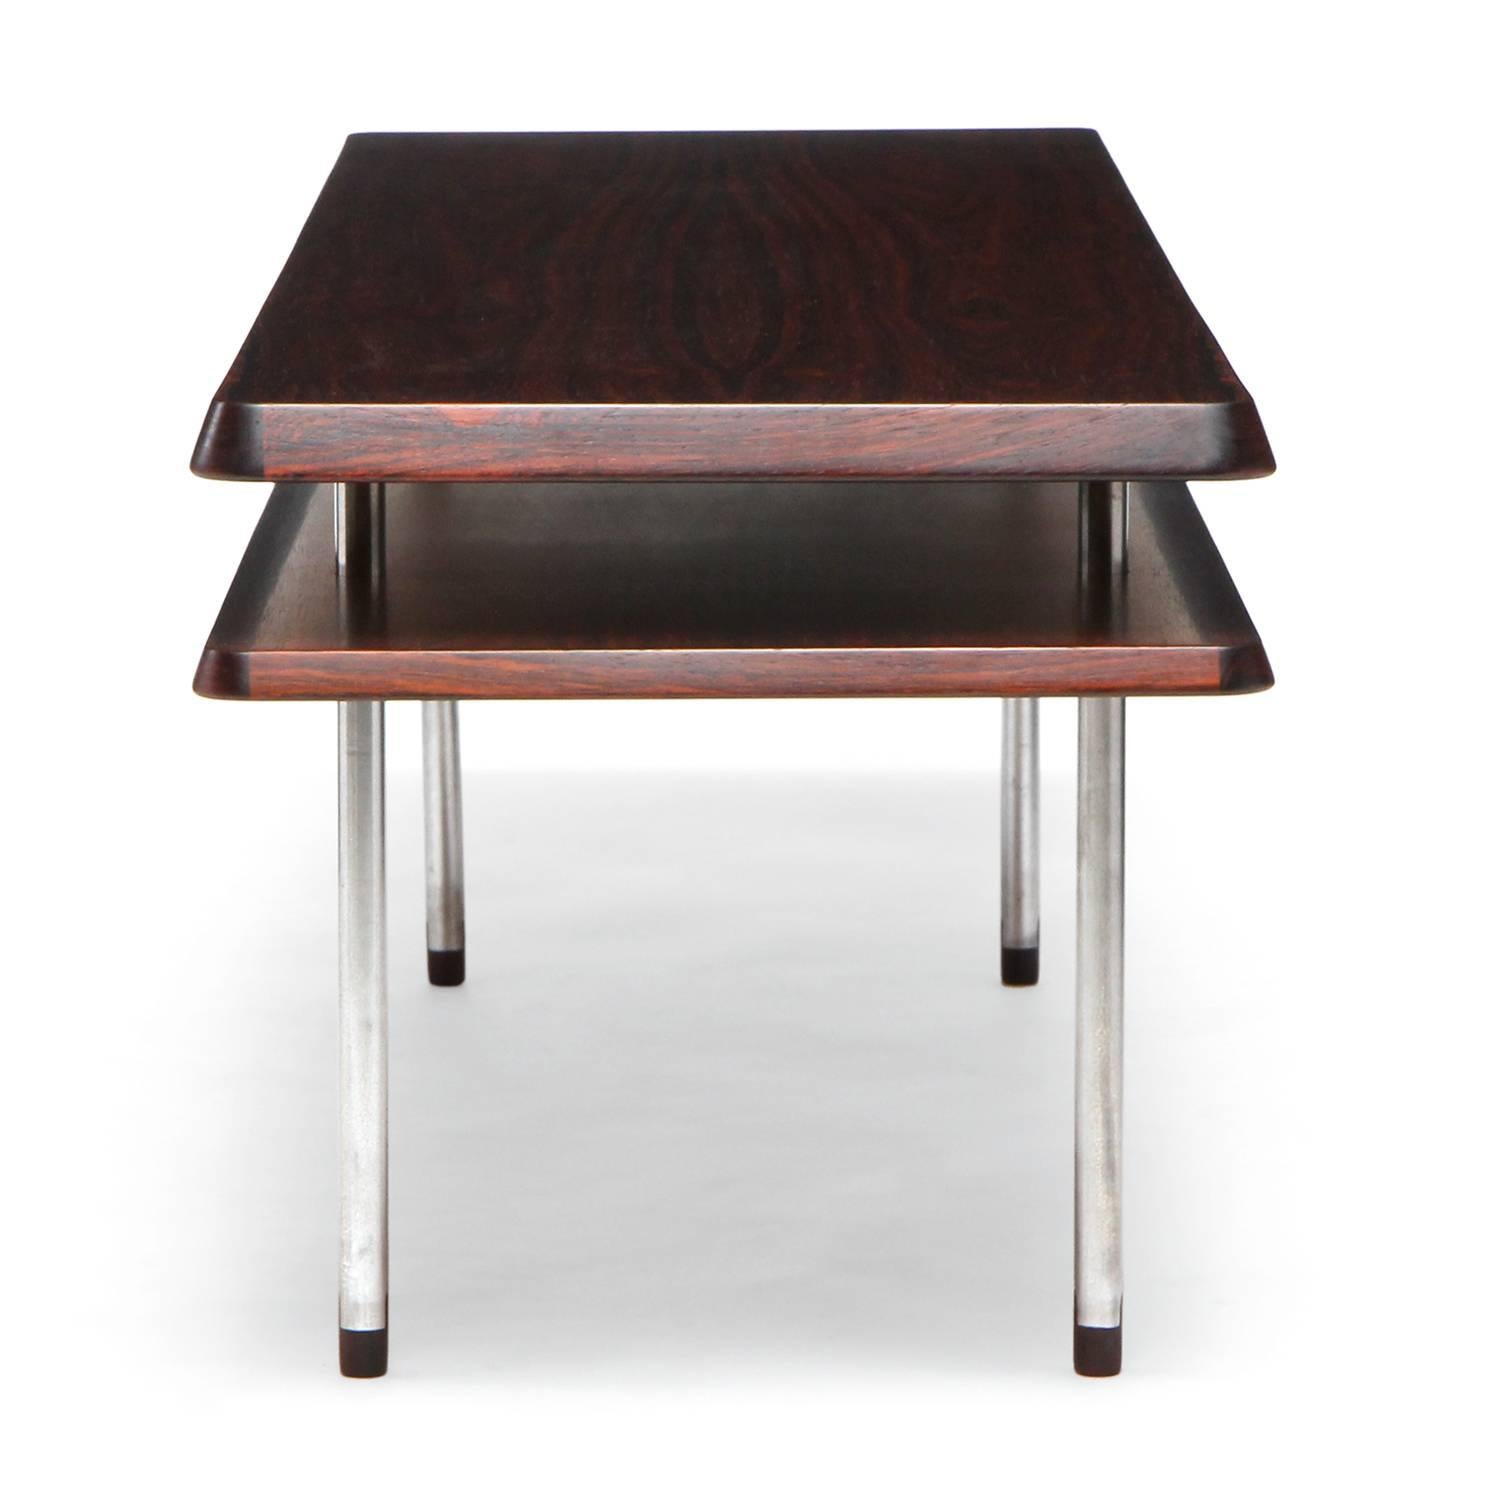 Danish Modern Rosewood Table / Bench by Johan Hagen 1